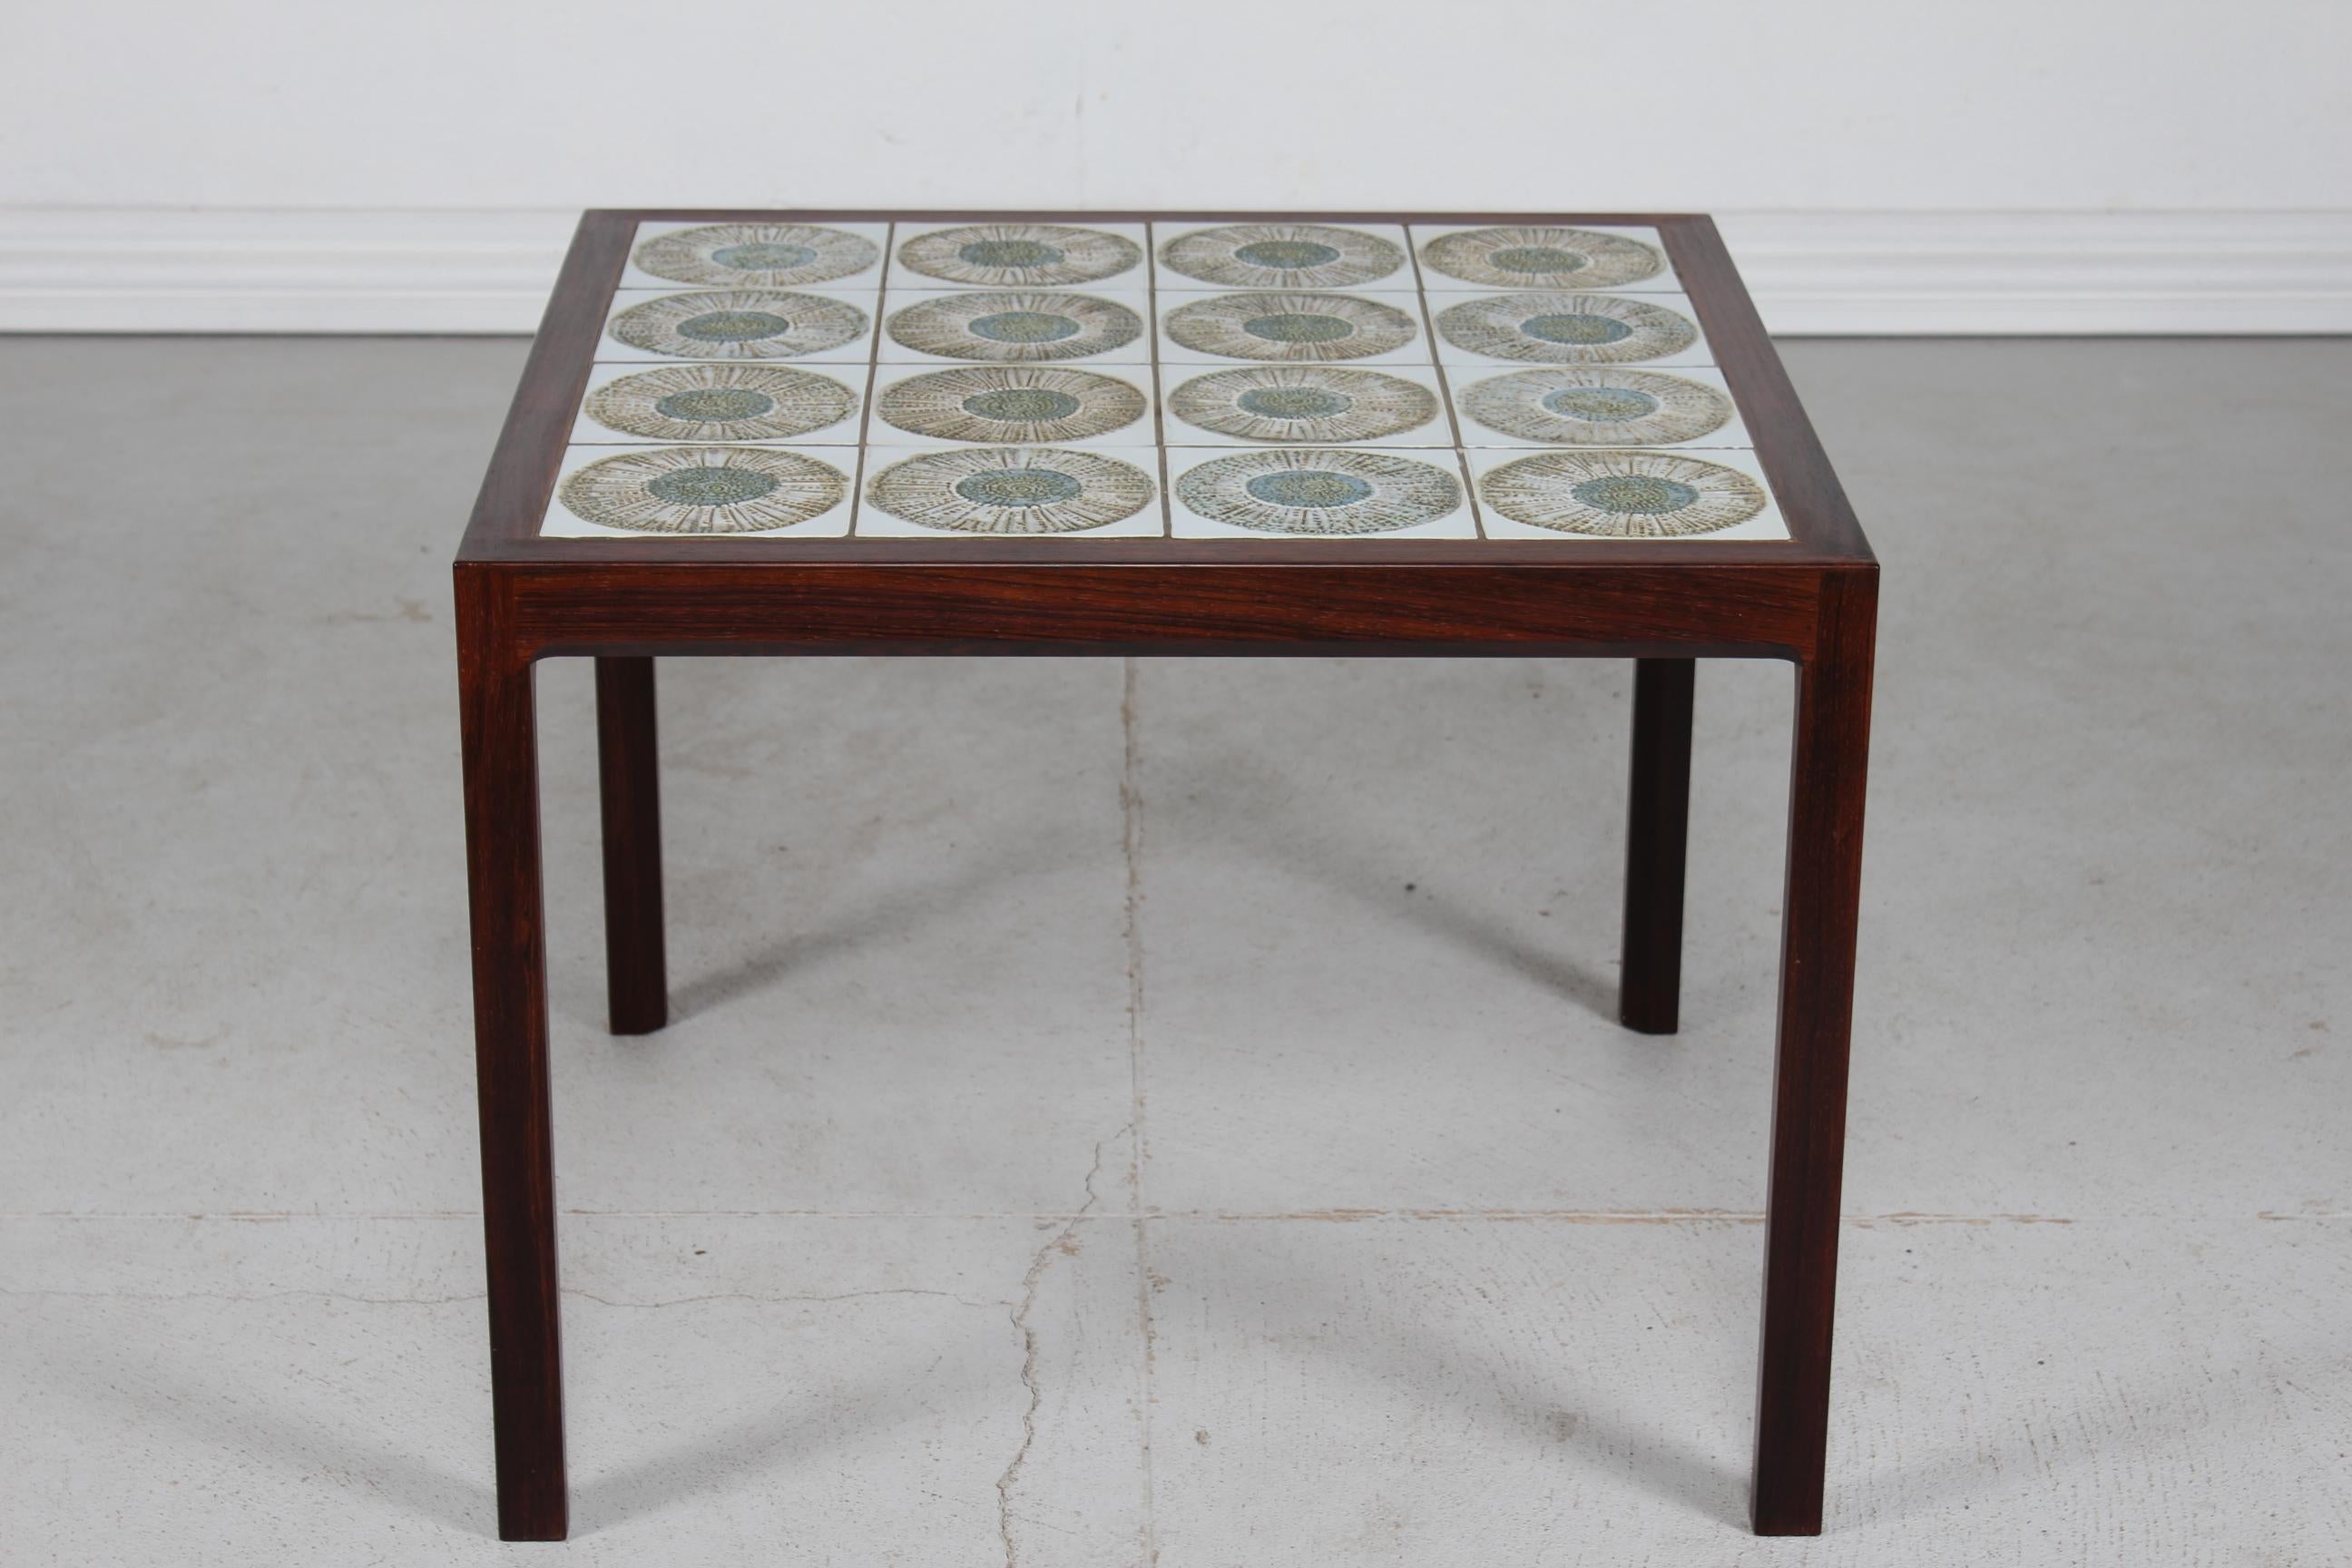 Ceramic Danish Modern Square Coffee Table Dark Wood with Royal Copenhagen Tiles, 1960s For Sale